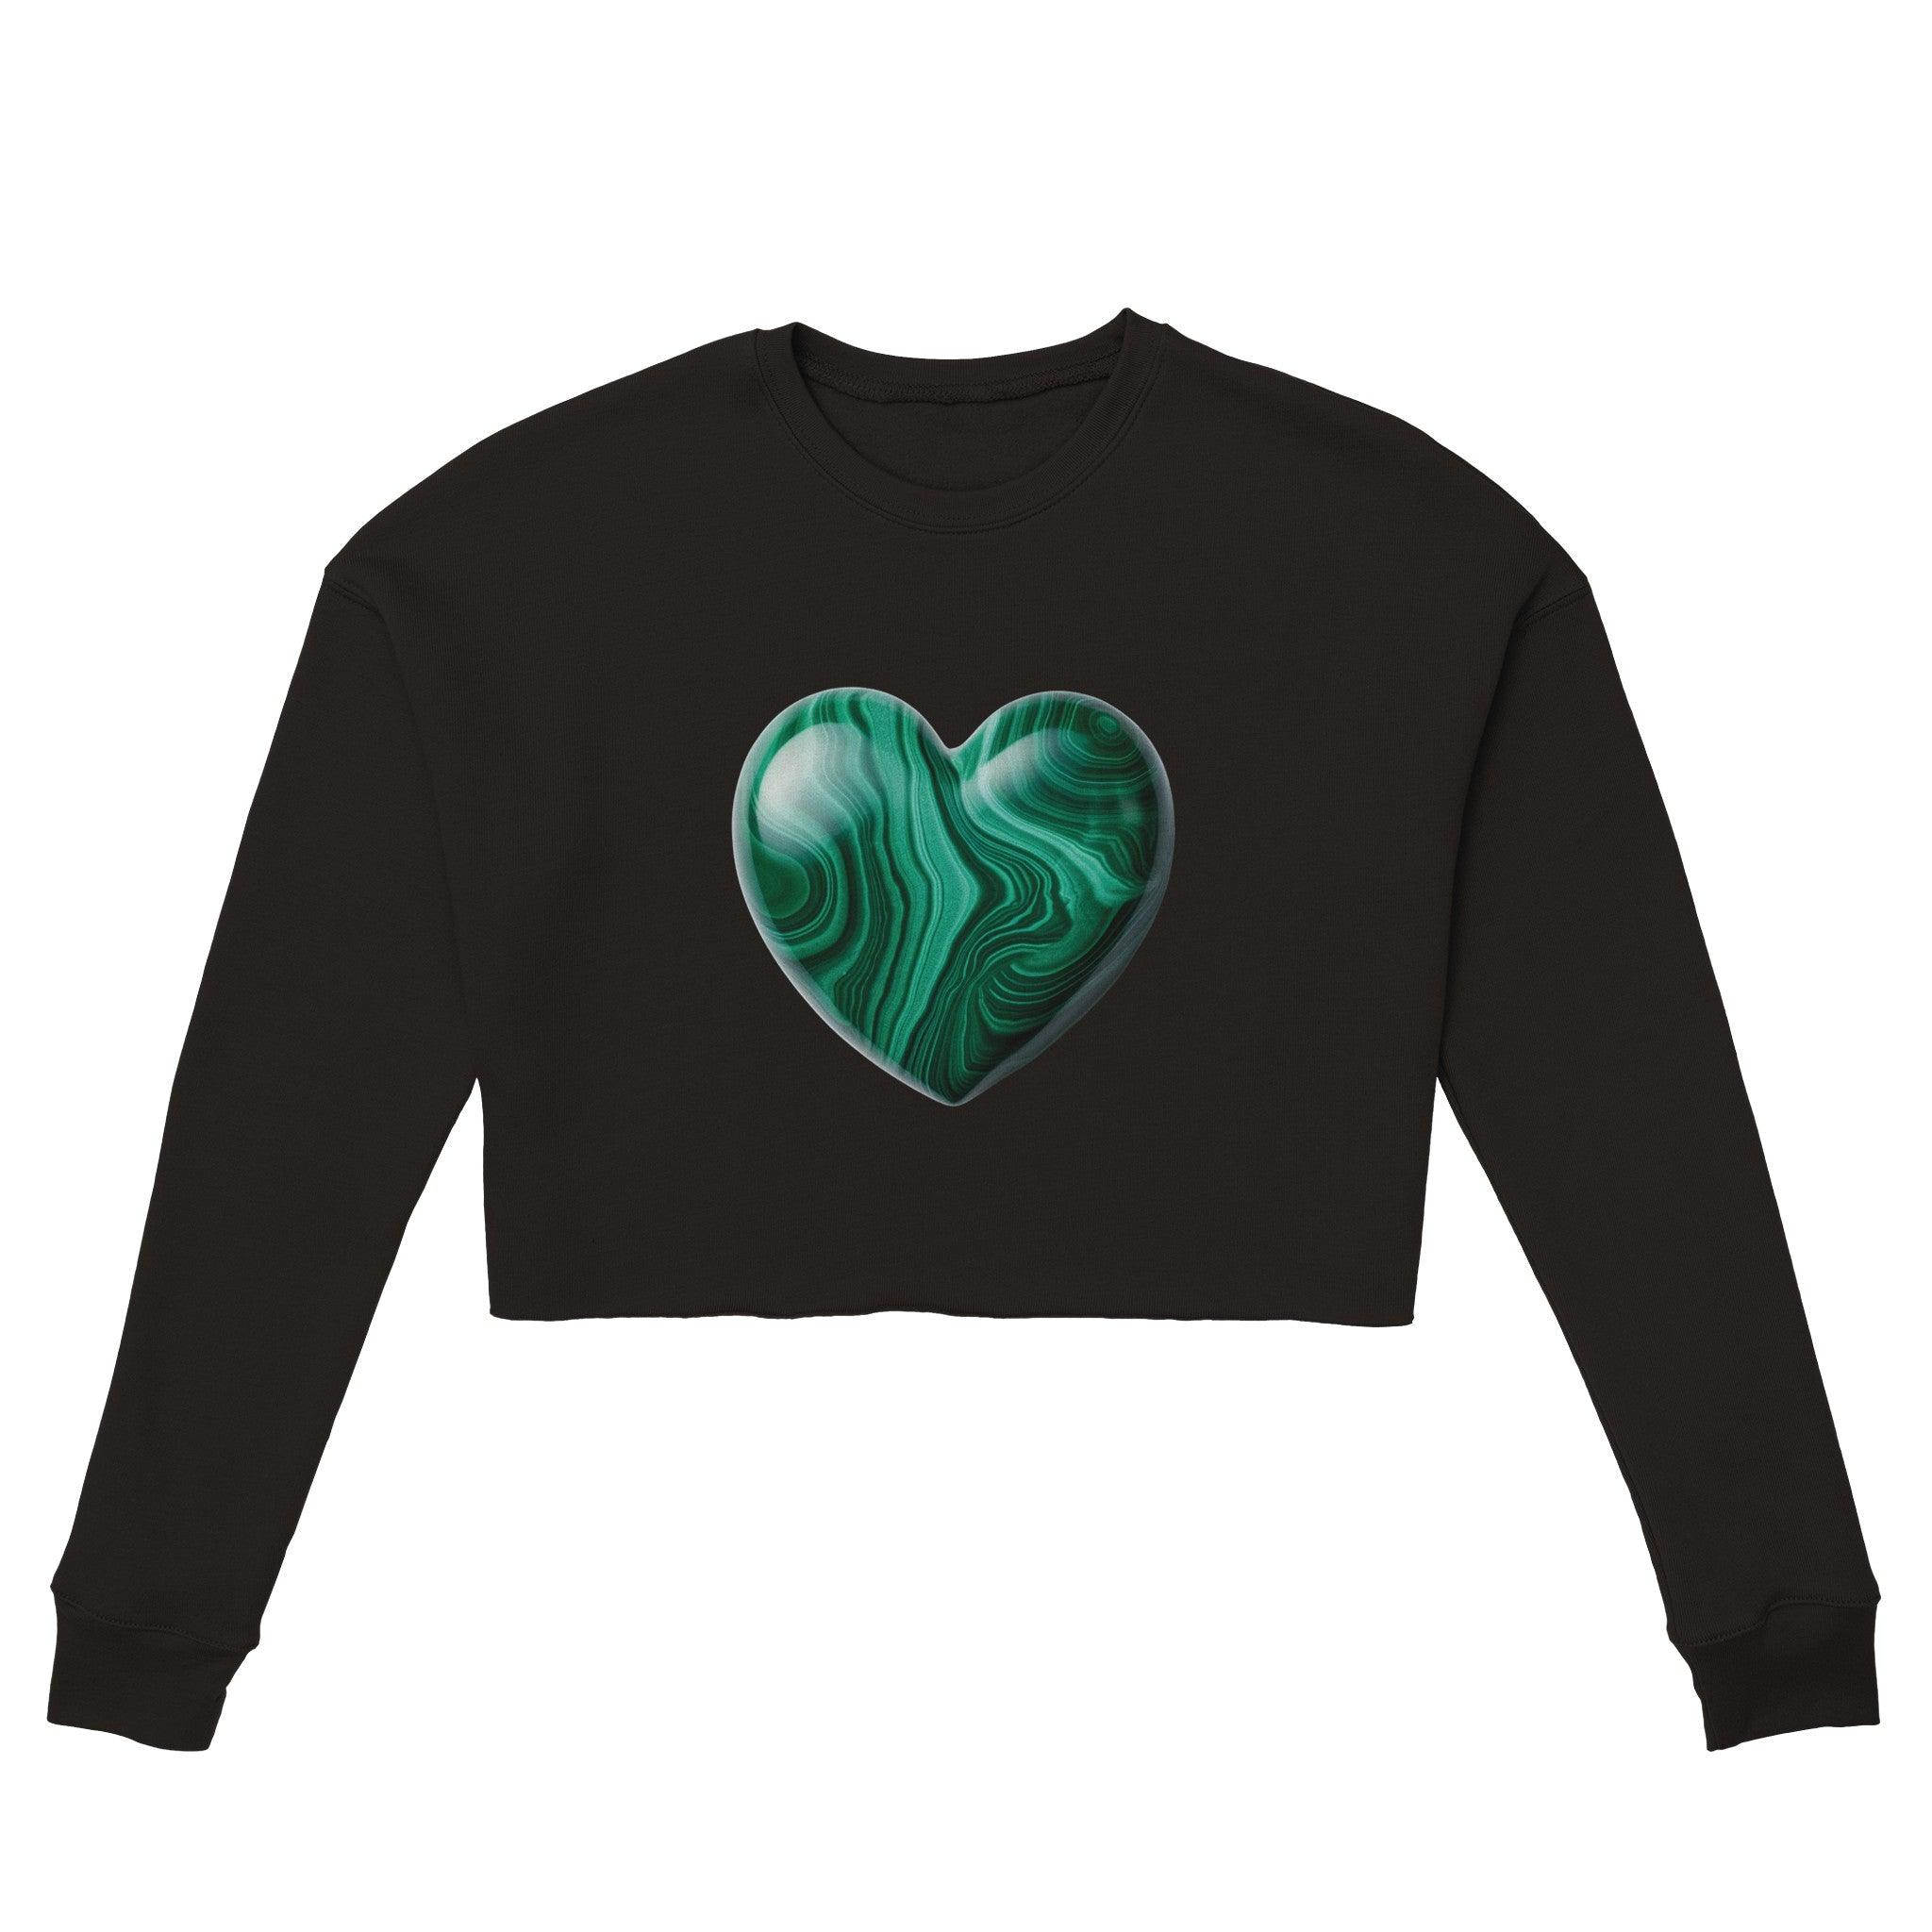 'Heart of stone' Cropped Sweatshirt - POMA